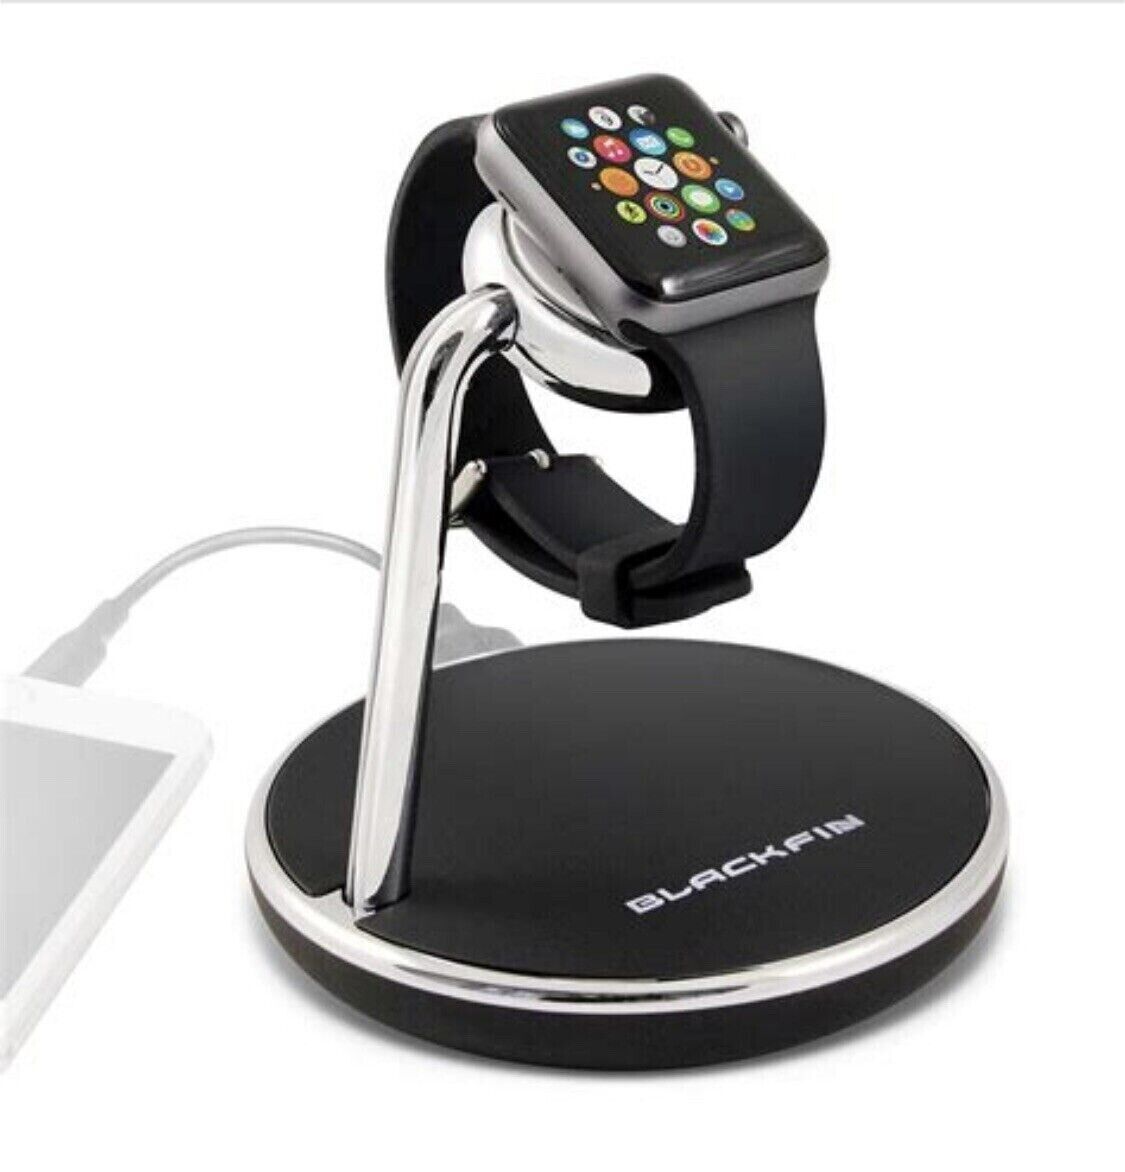 Black Fin Charging Stand For Apple Watch, w/ USB Port - Black/Sliver